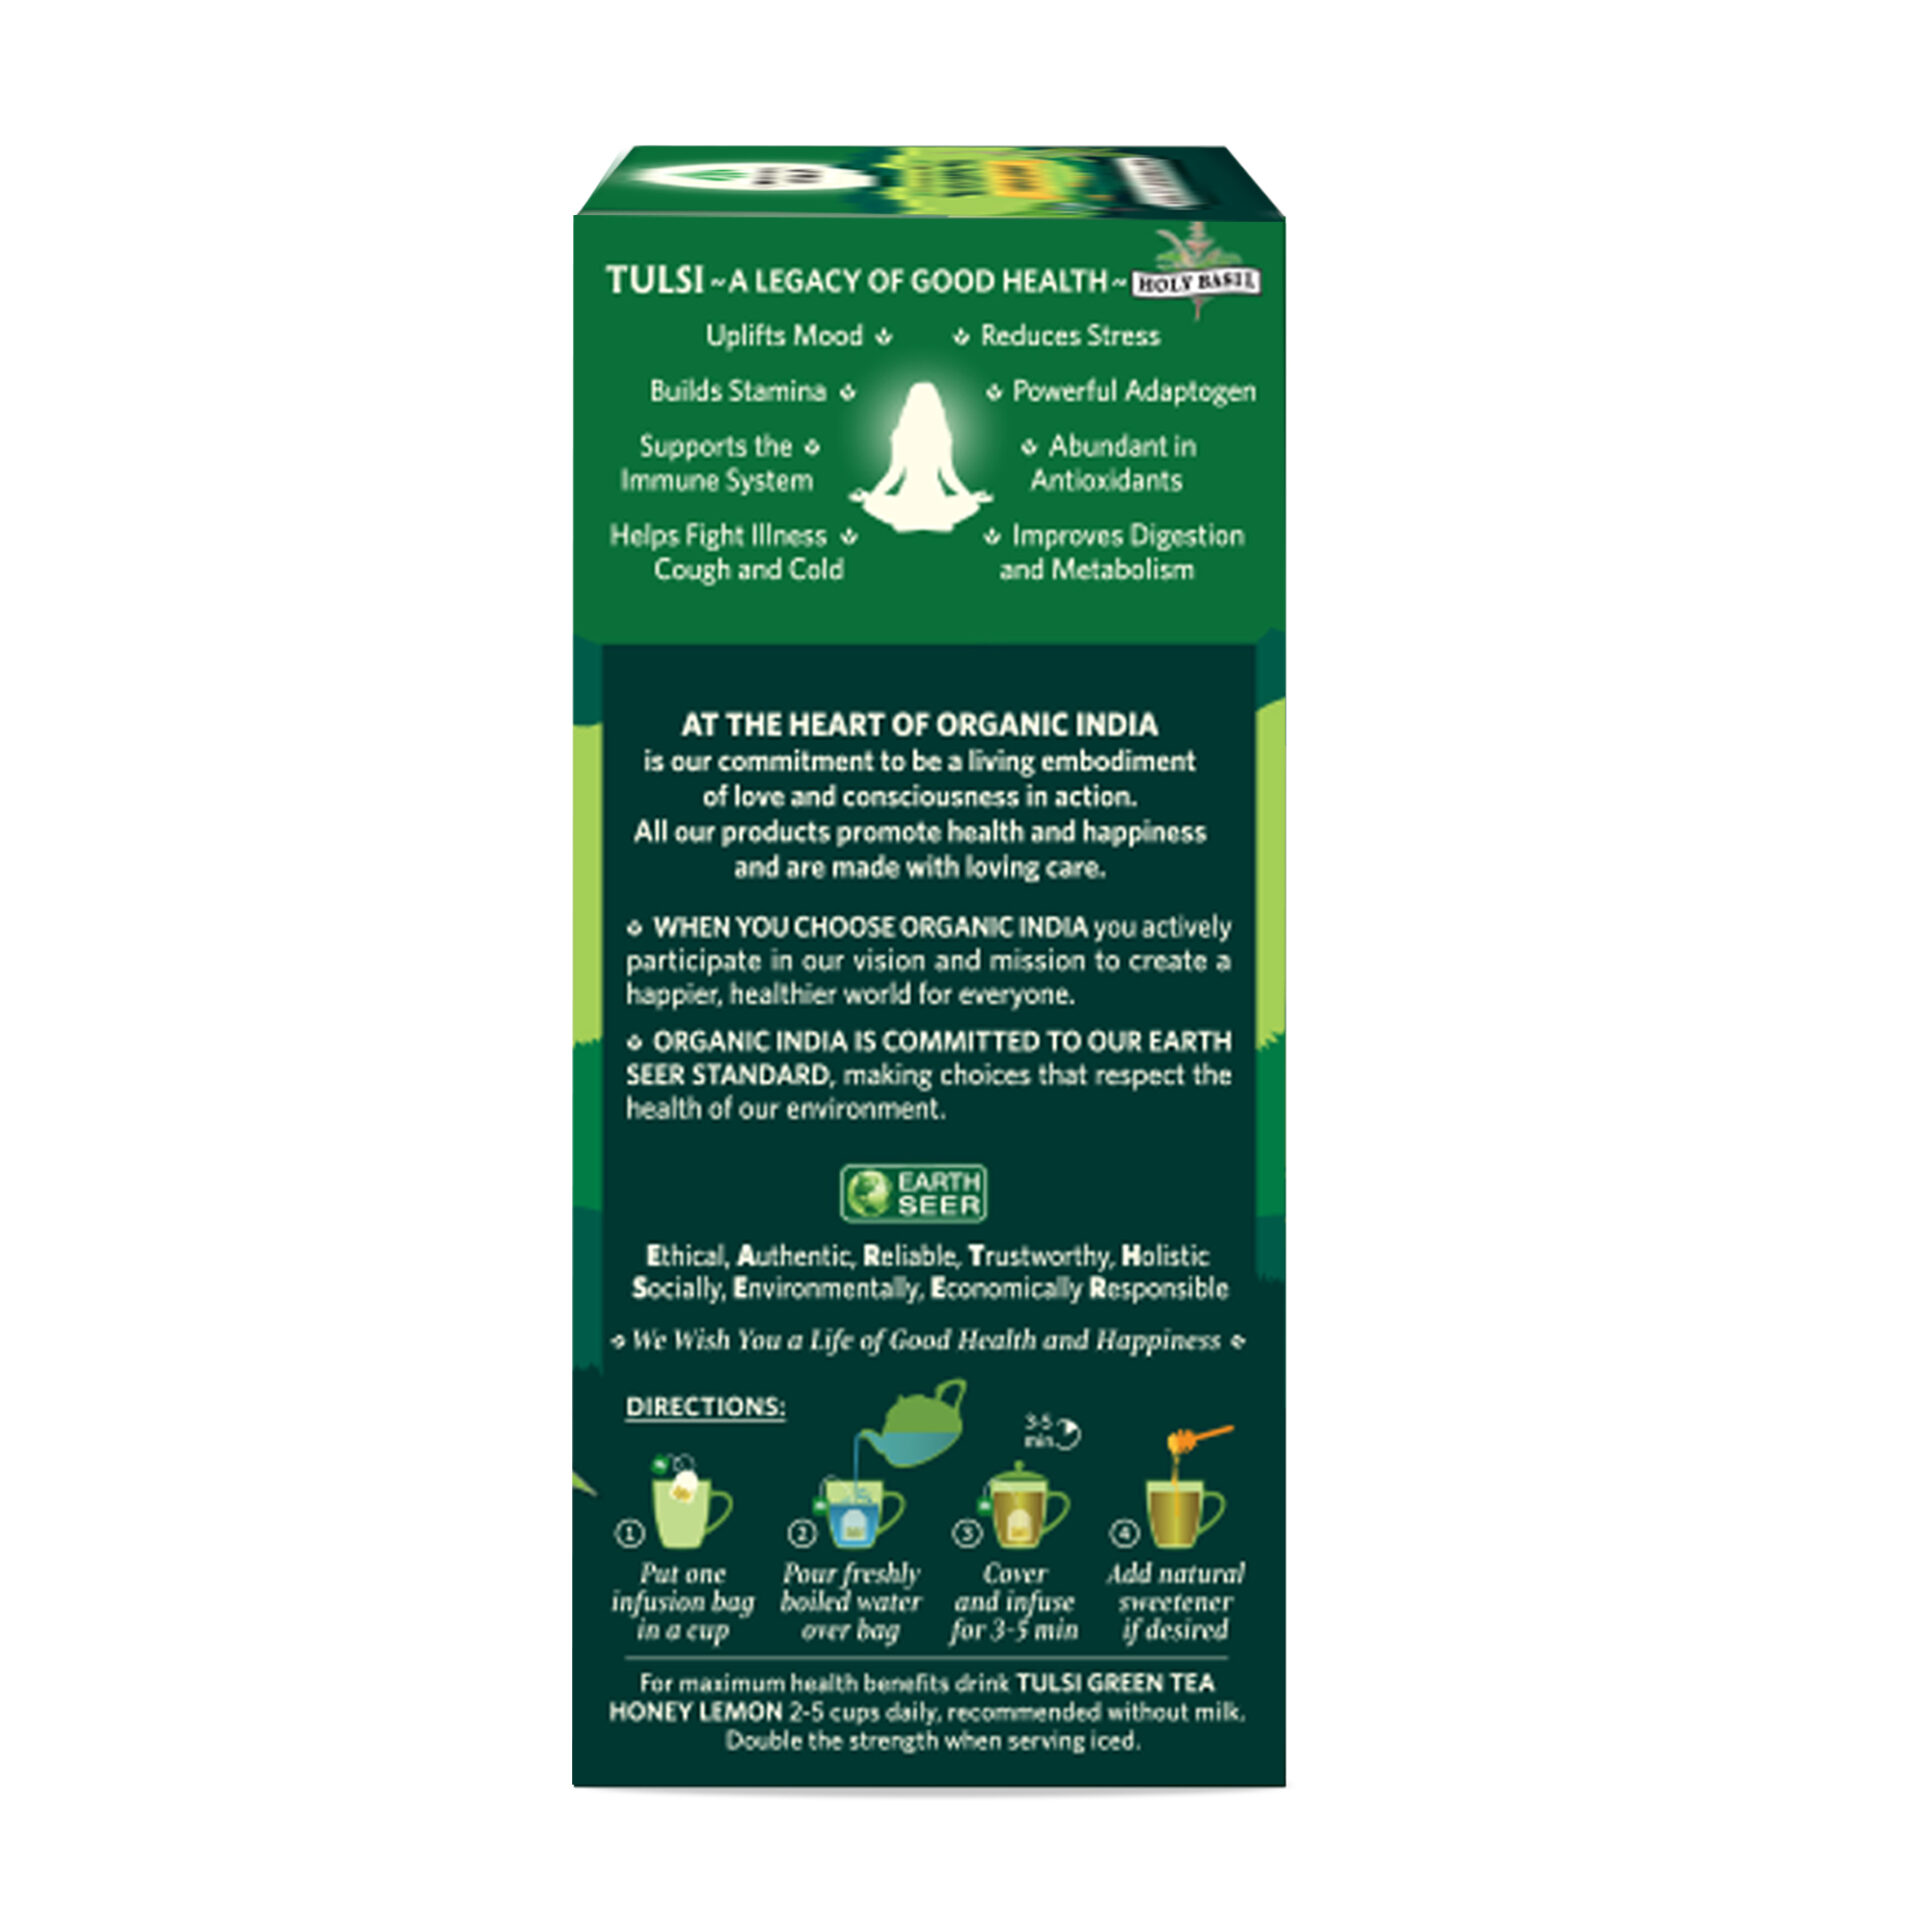 Organic India – Tulsi Green Tea Honey Lemon 25 Teabags